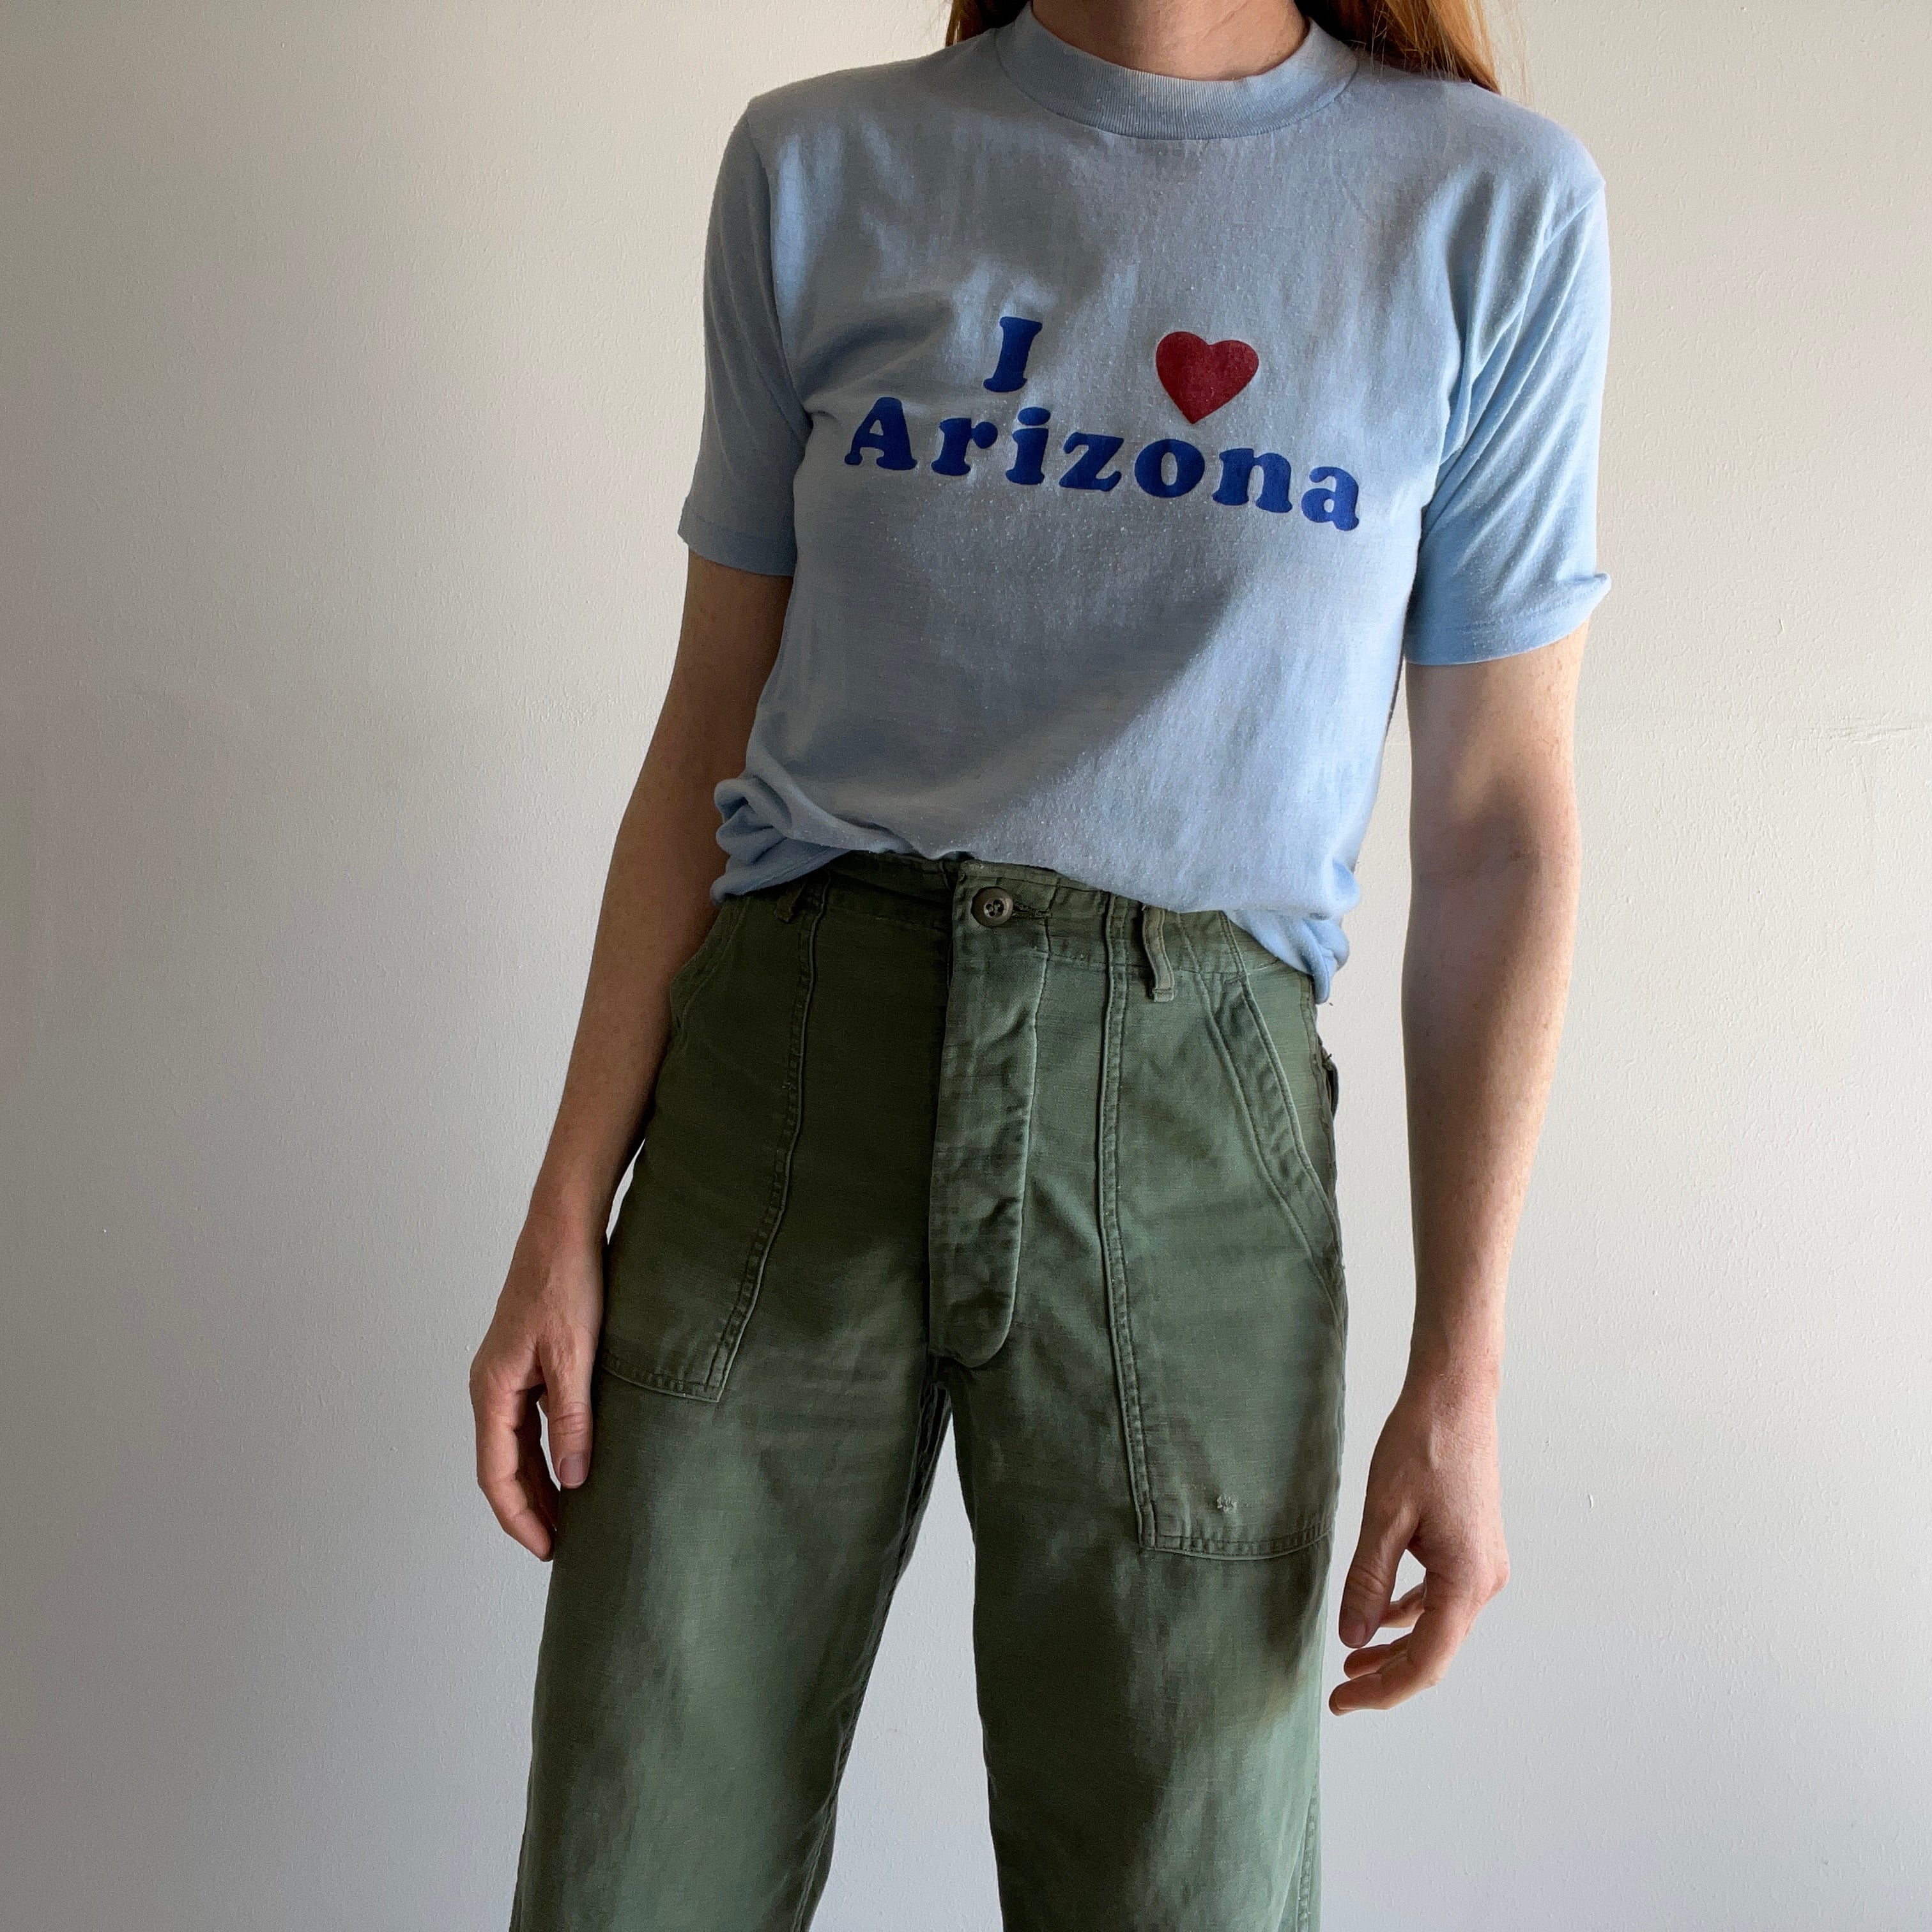 1970/80s I Love Arizona Super Stained T-Shirt